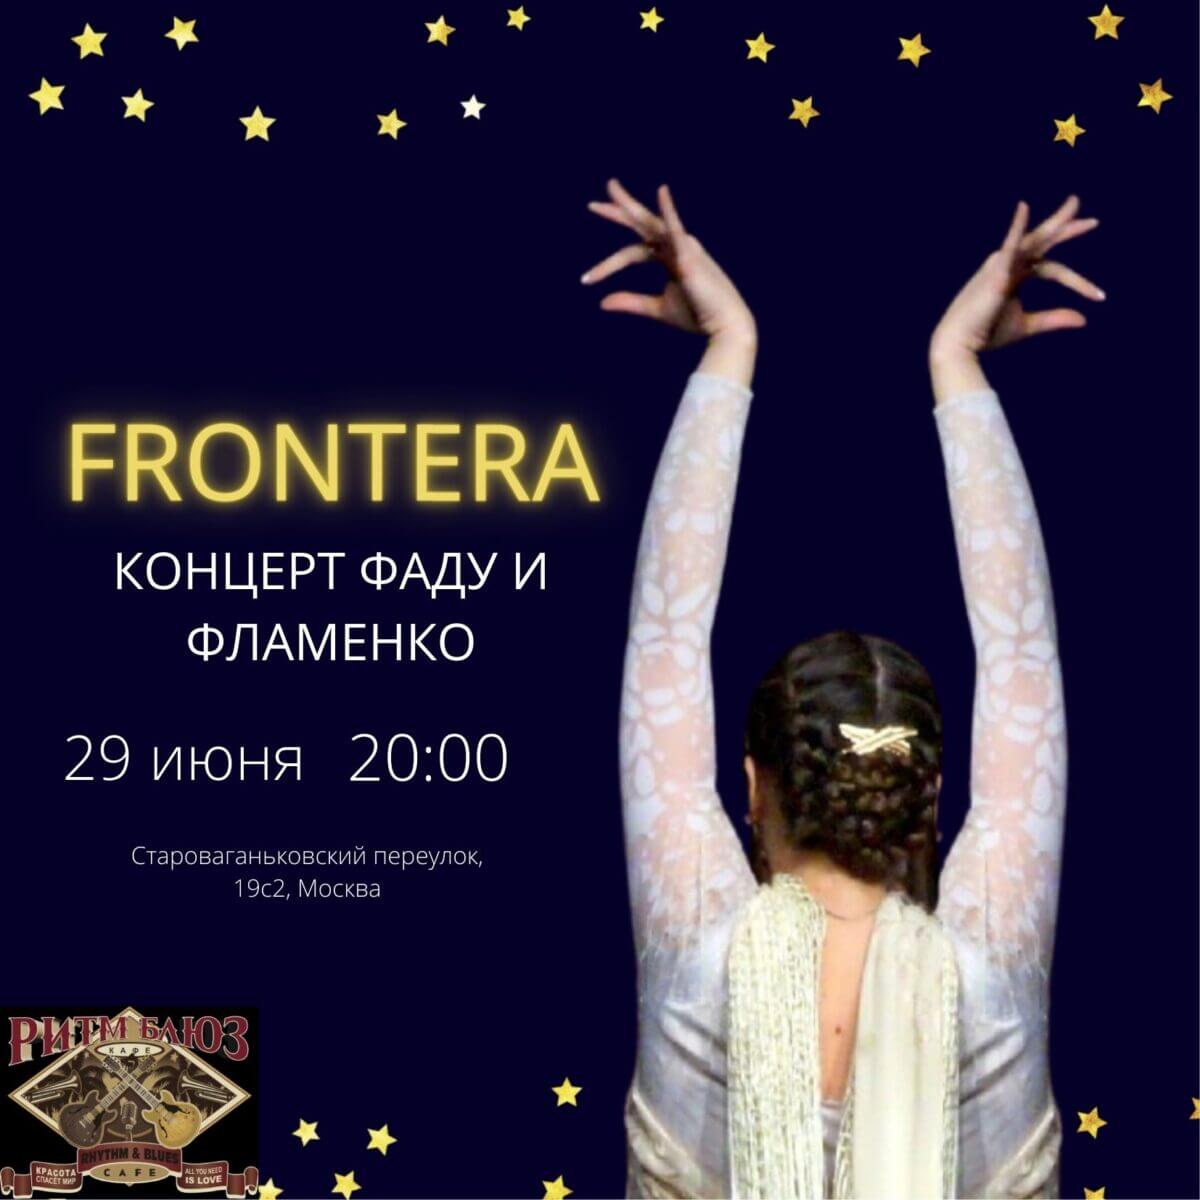 Концерт «FRONTERA»